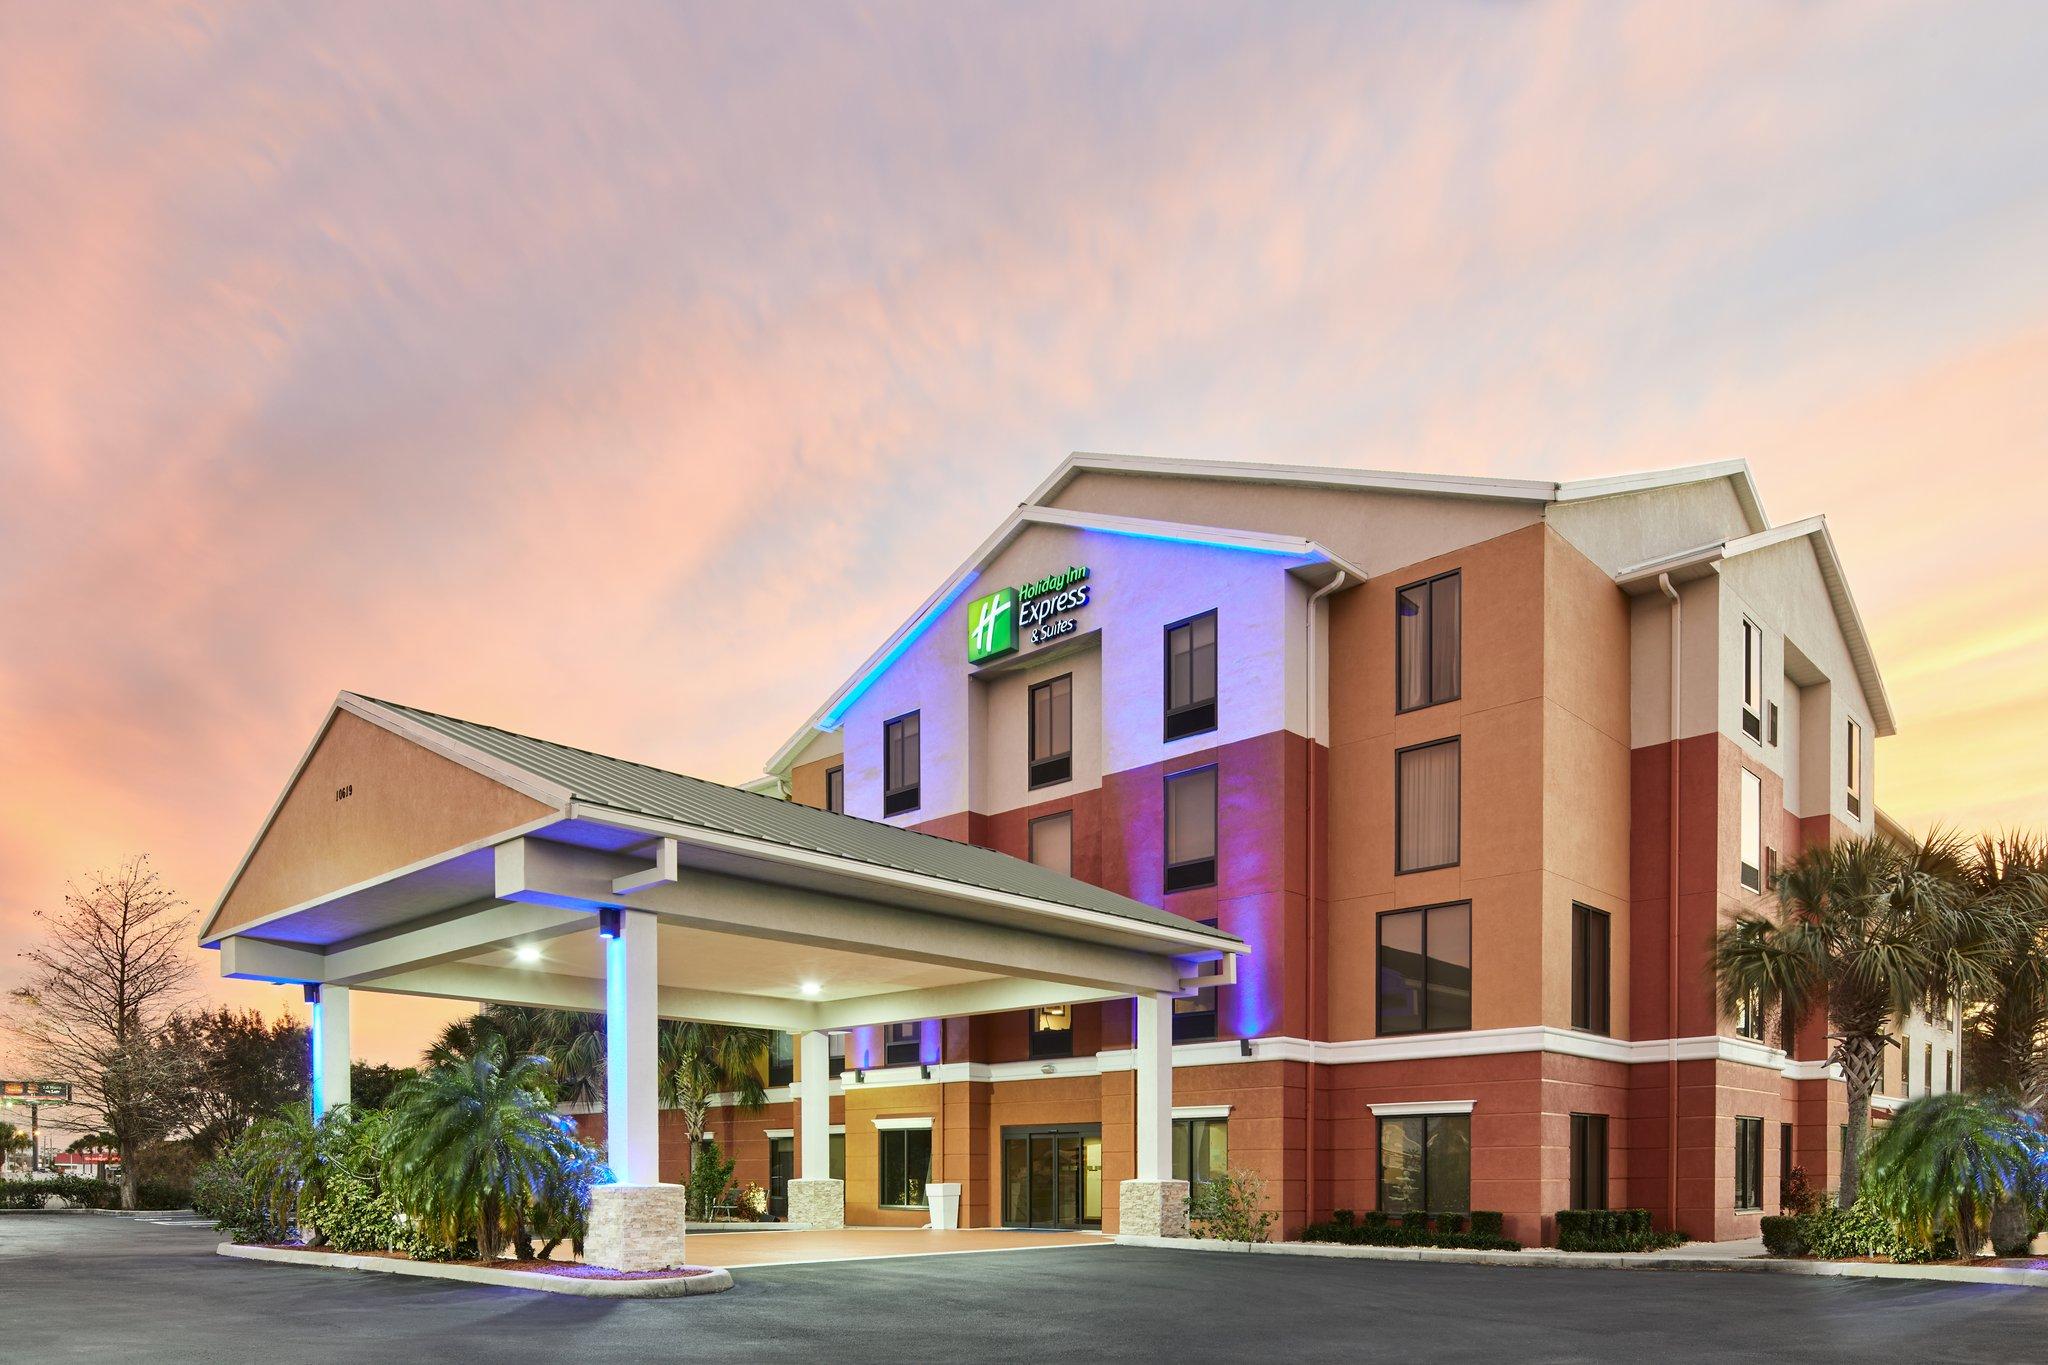 Holiday Inn Express Hotel & Suites Port Richey in Port Richey, FL